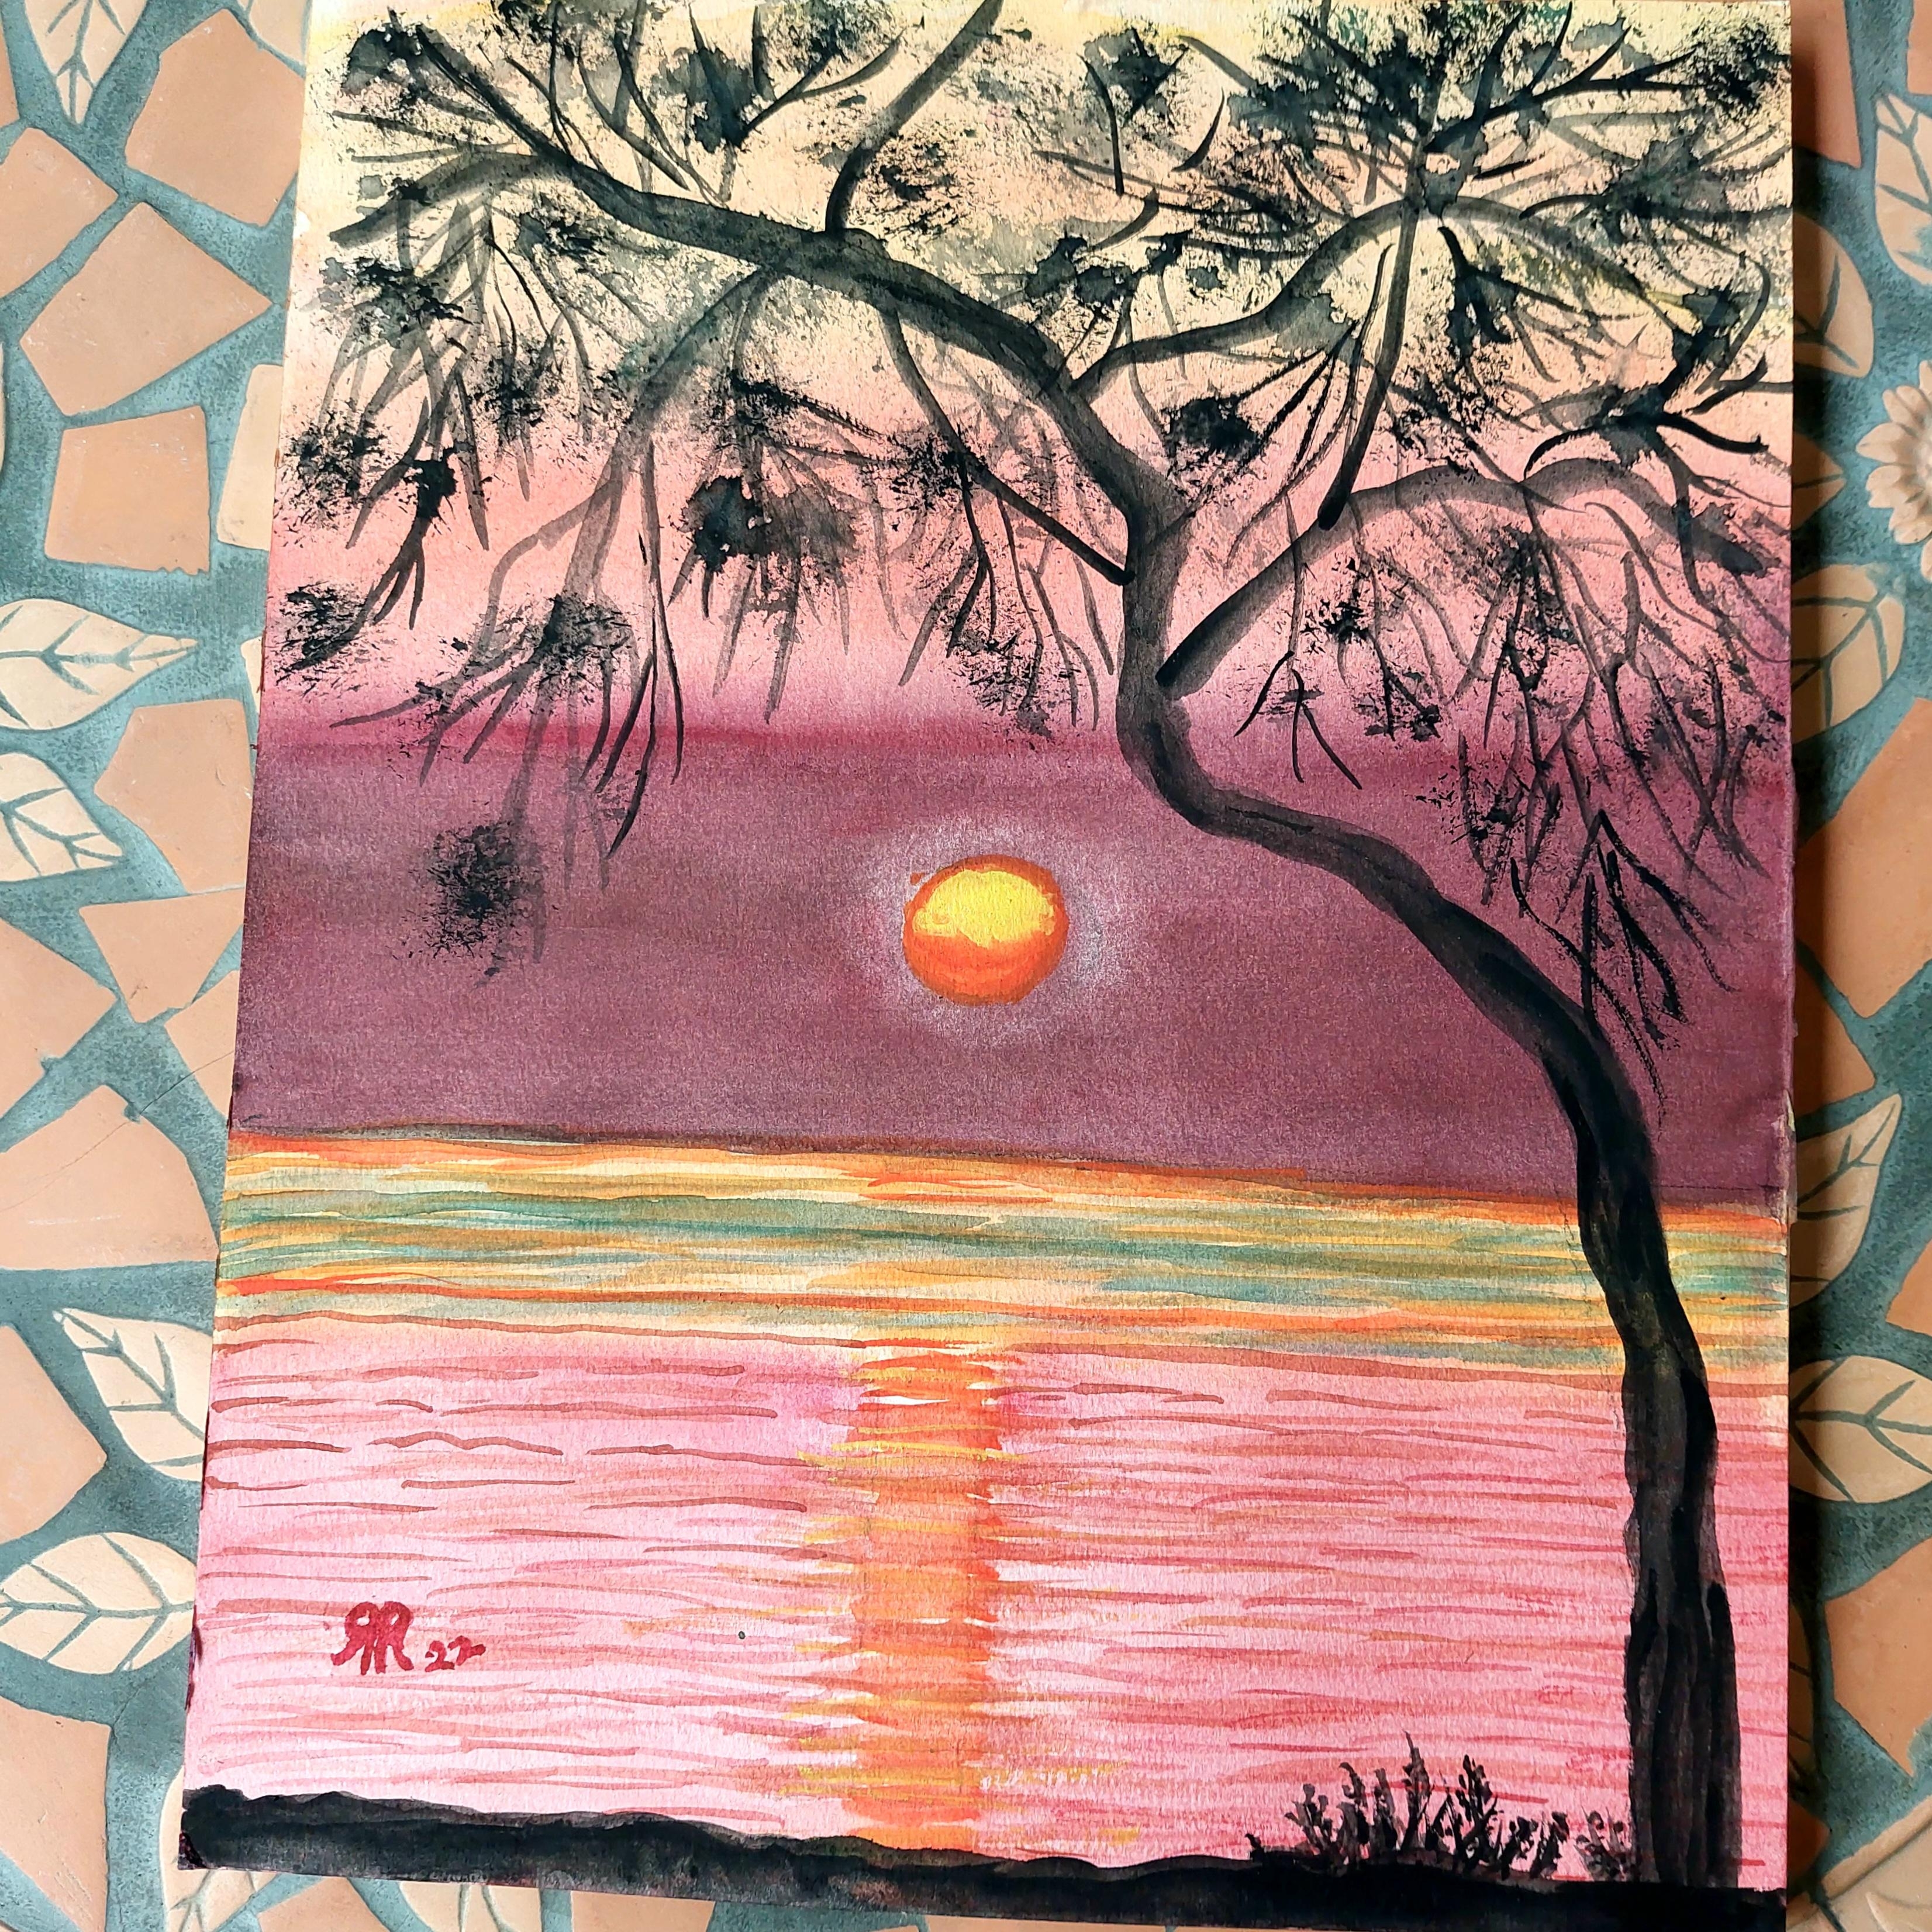 SUN-SET 🌅
#art #kunst #künstlerin #malereikunst #malerei #Instagram.com/art_by_rena 
